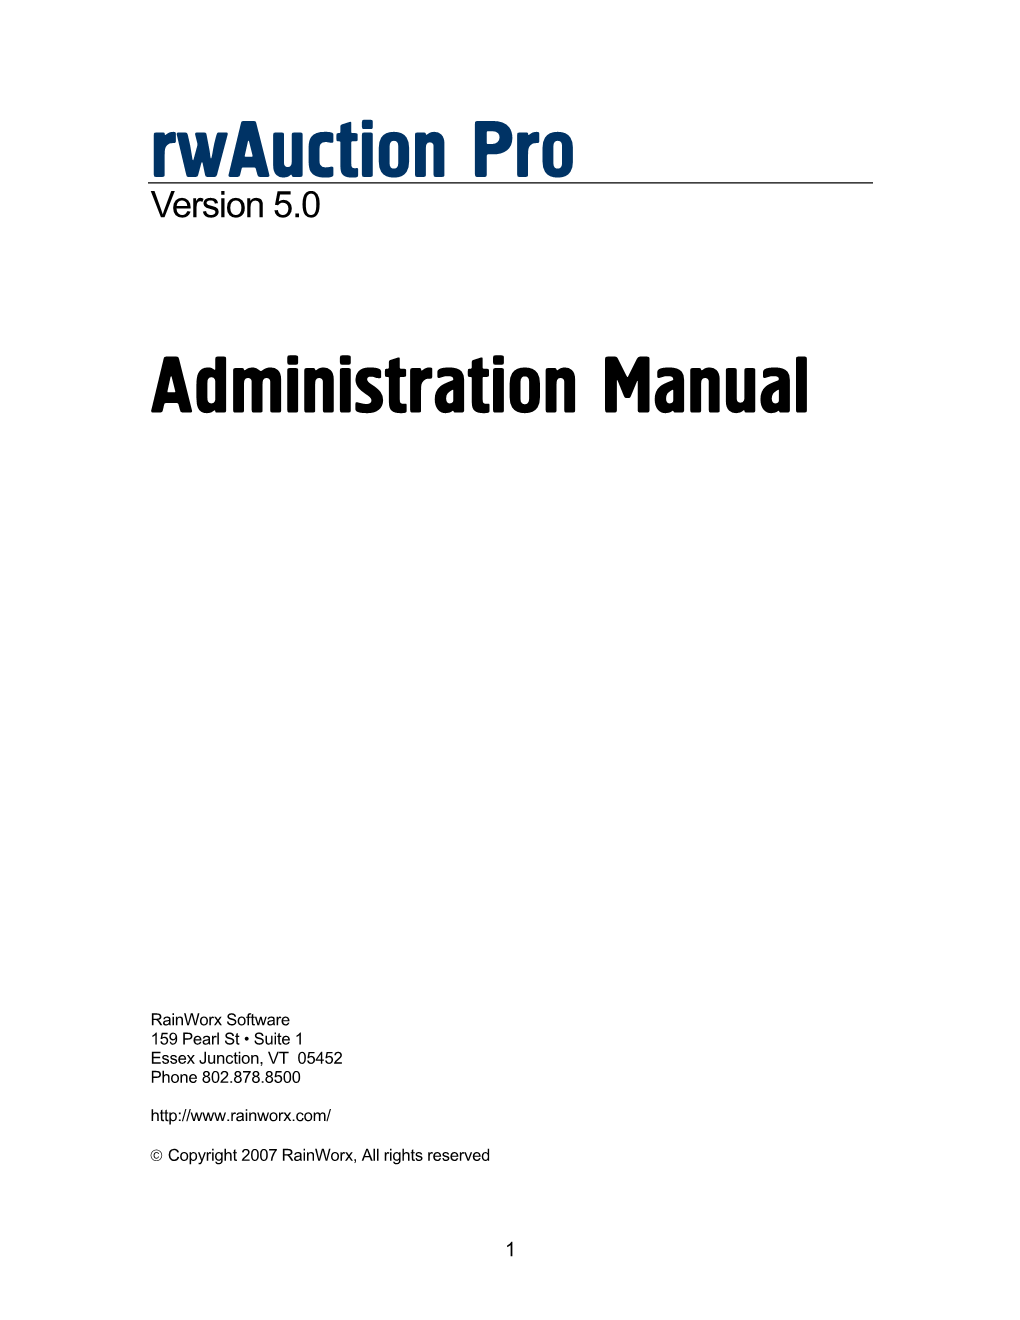 Rwauction Pro Administration Manual